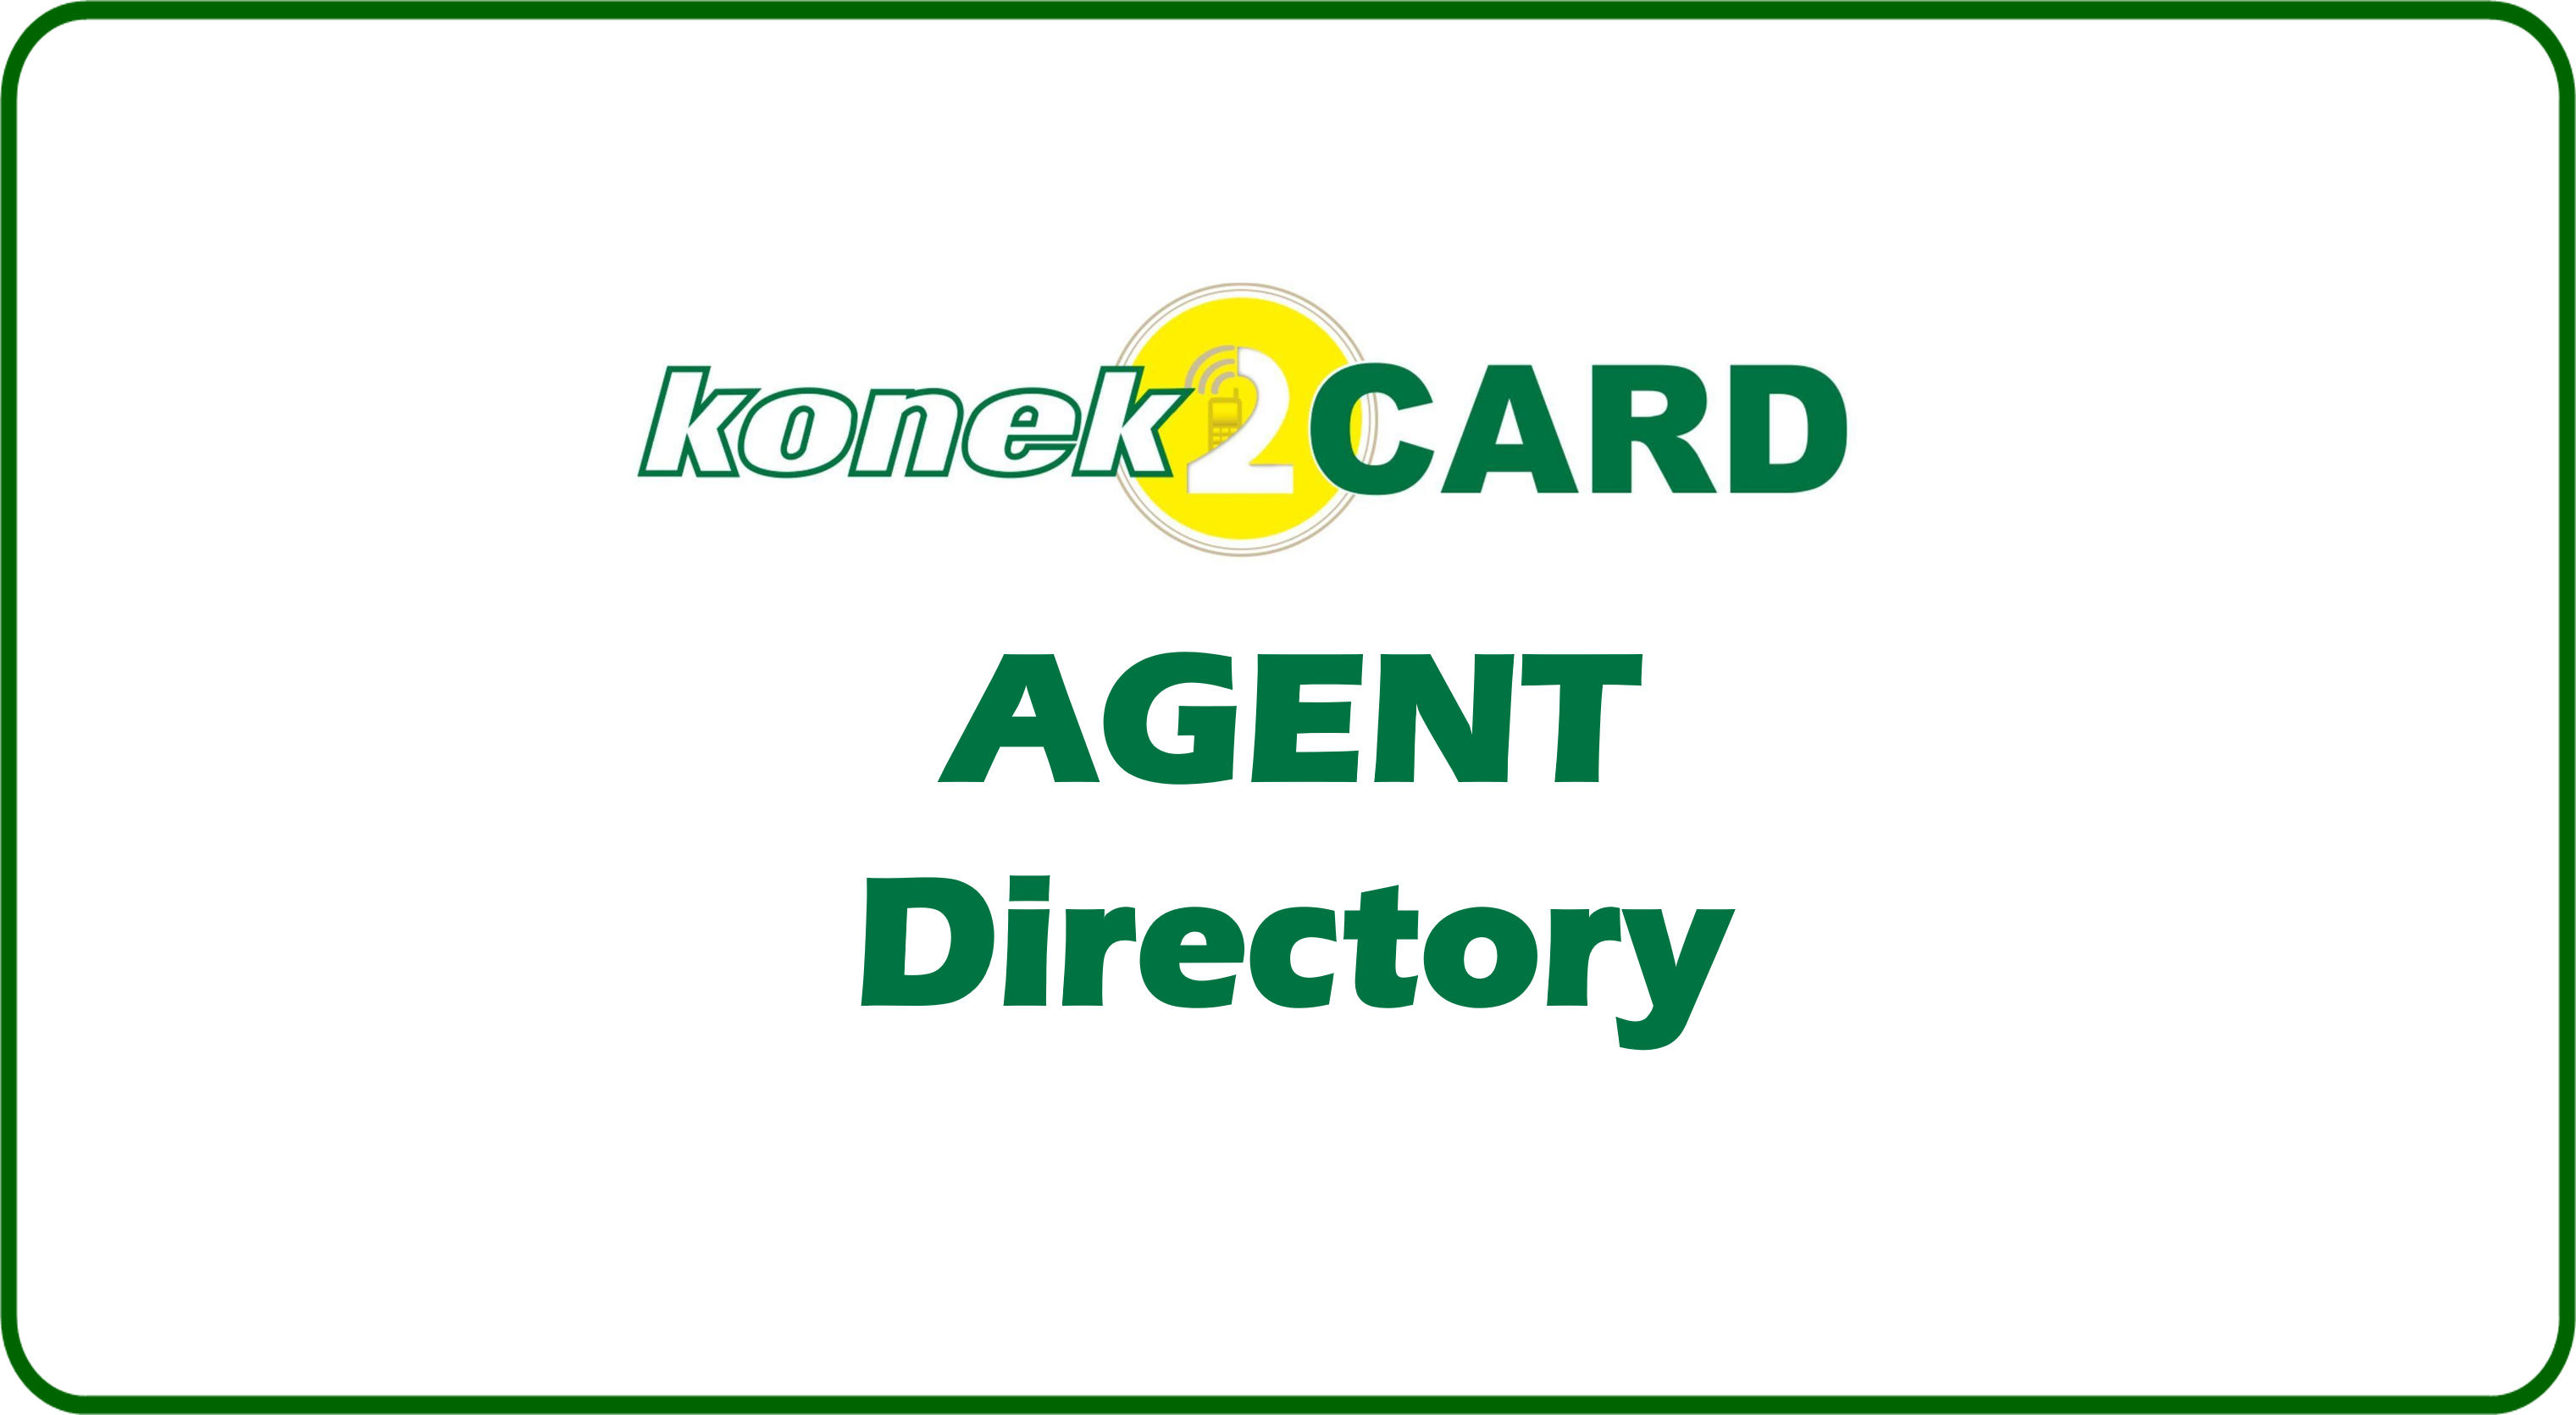 konek2CARD Agent Directory as of September 30, 2021